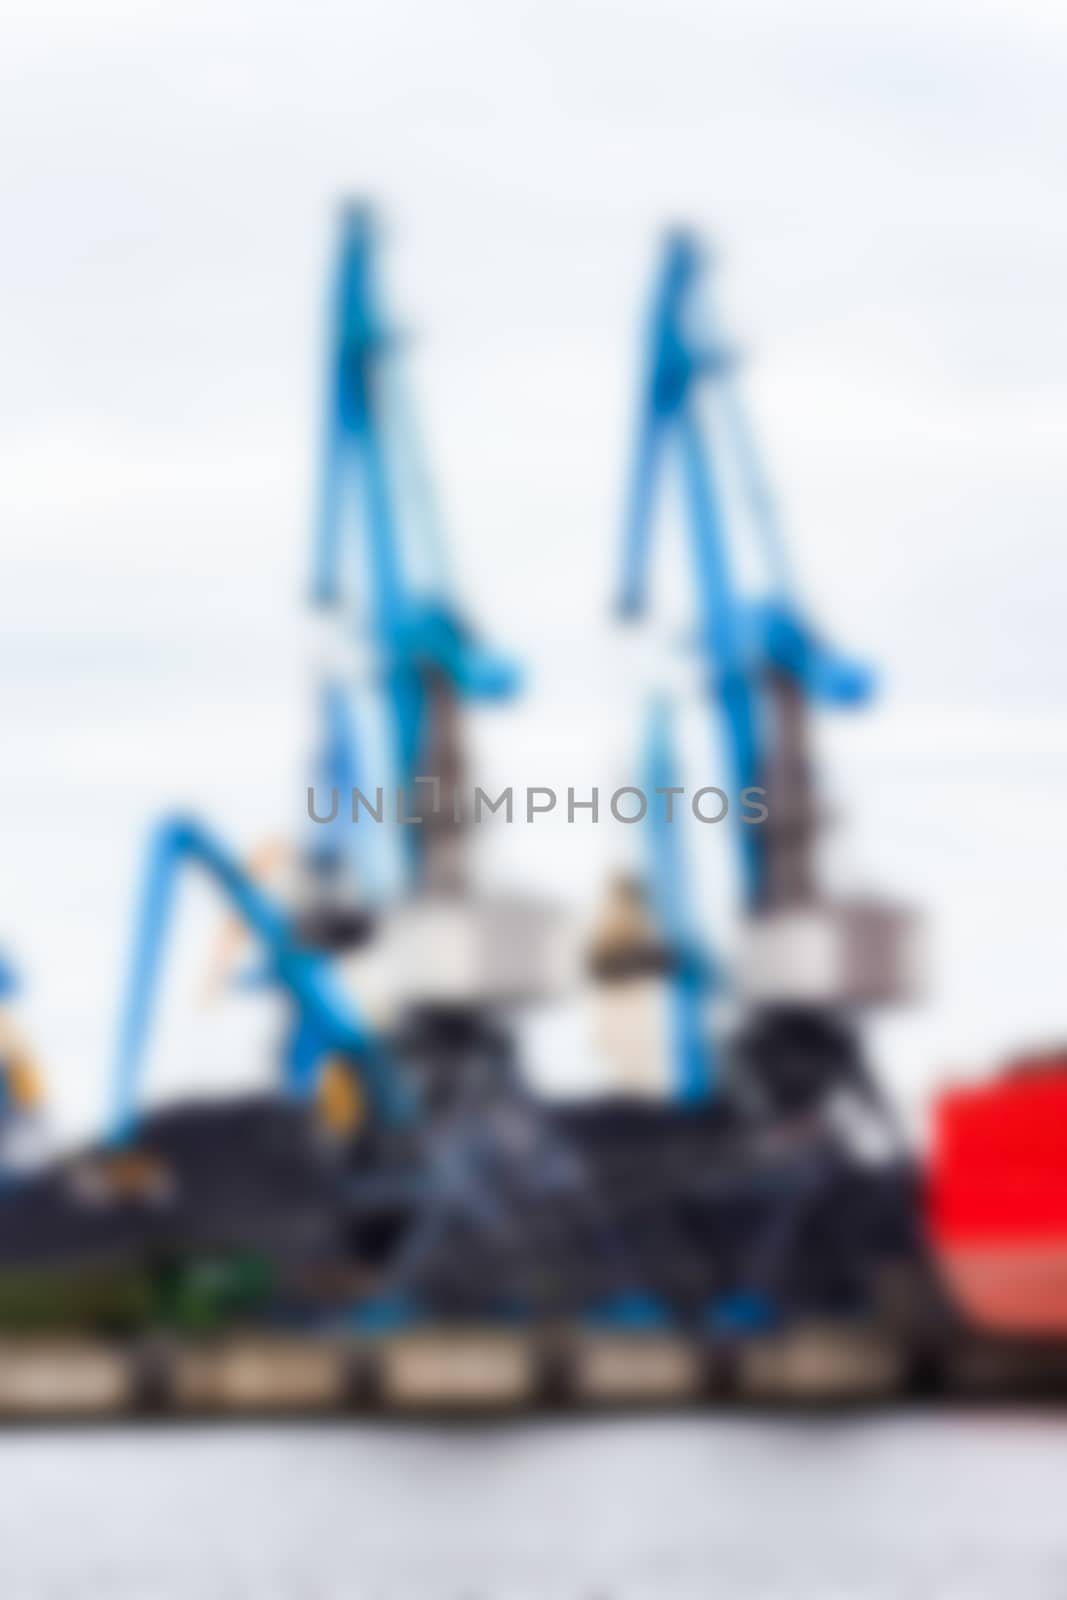 Portal cargo cranes - soft lens bokeh image. Defocused background